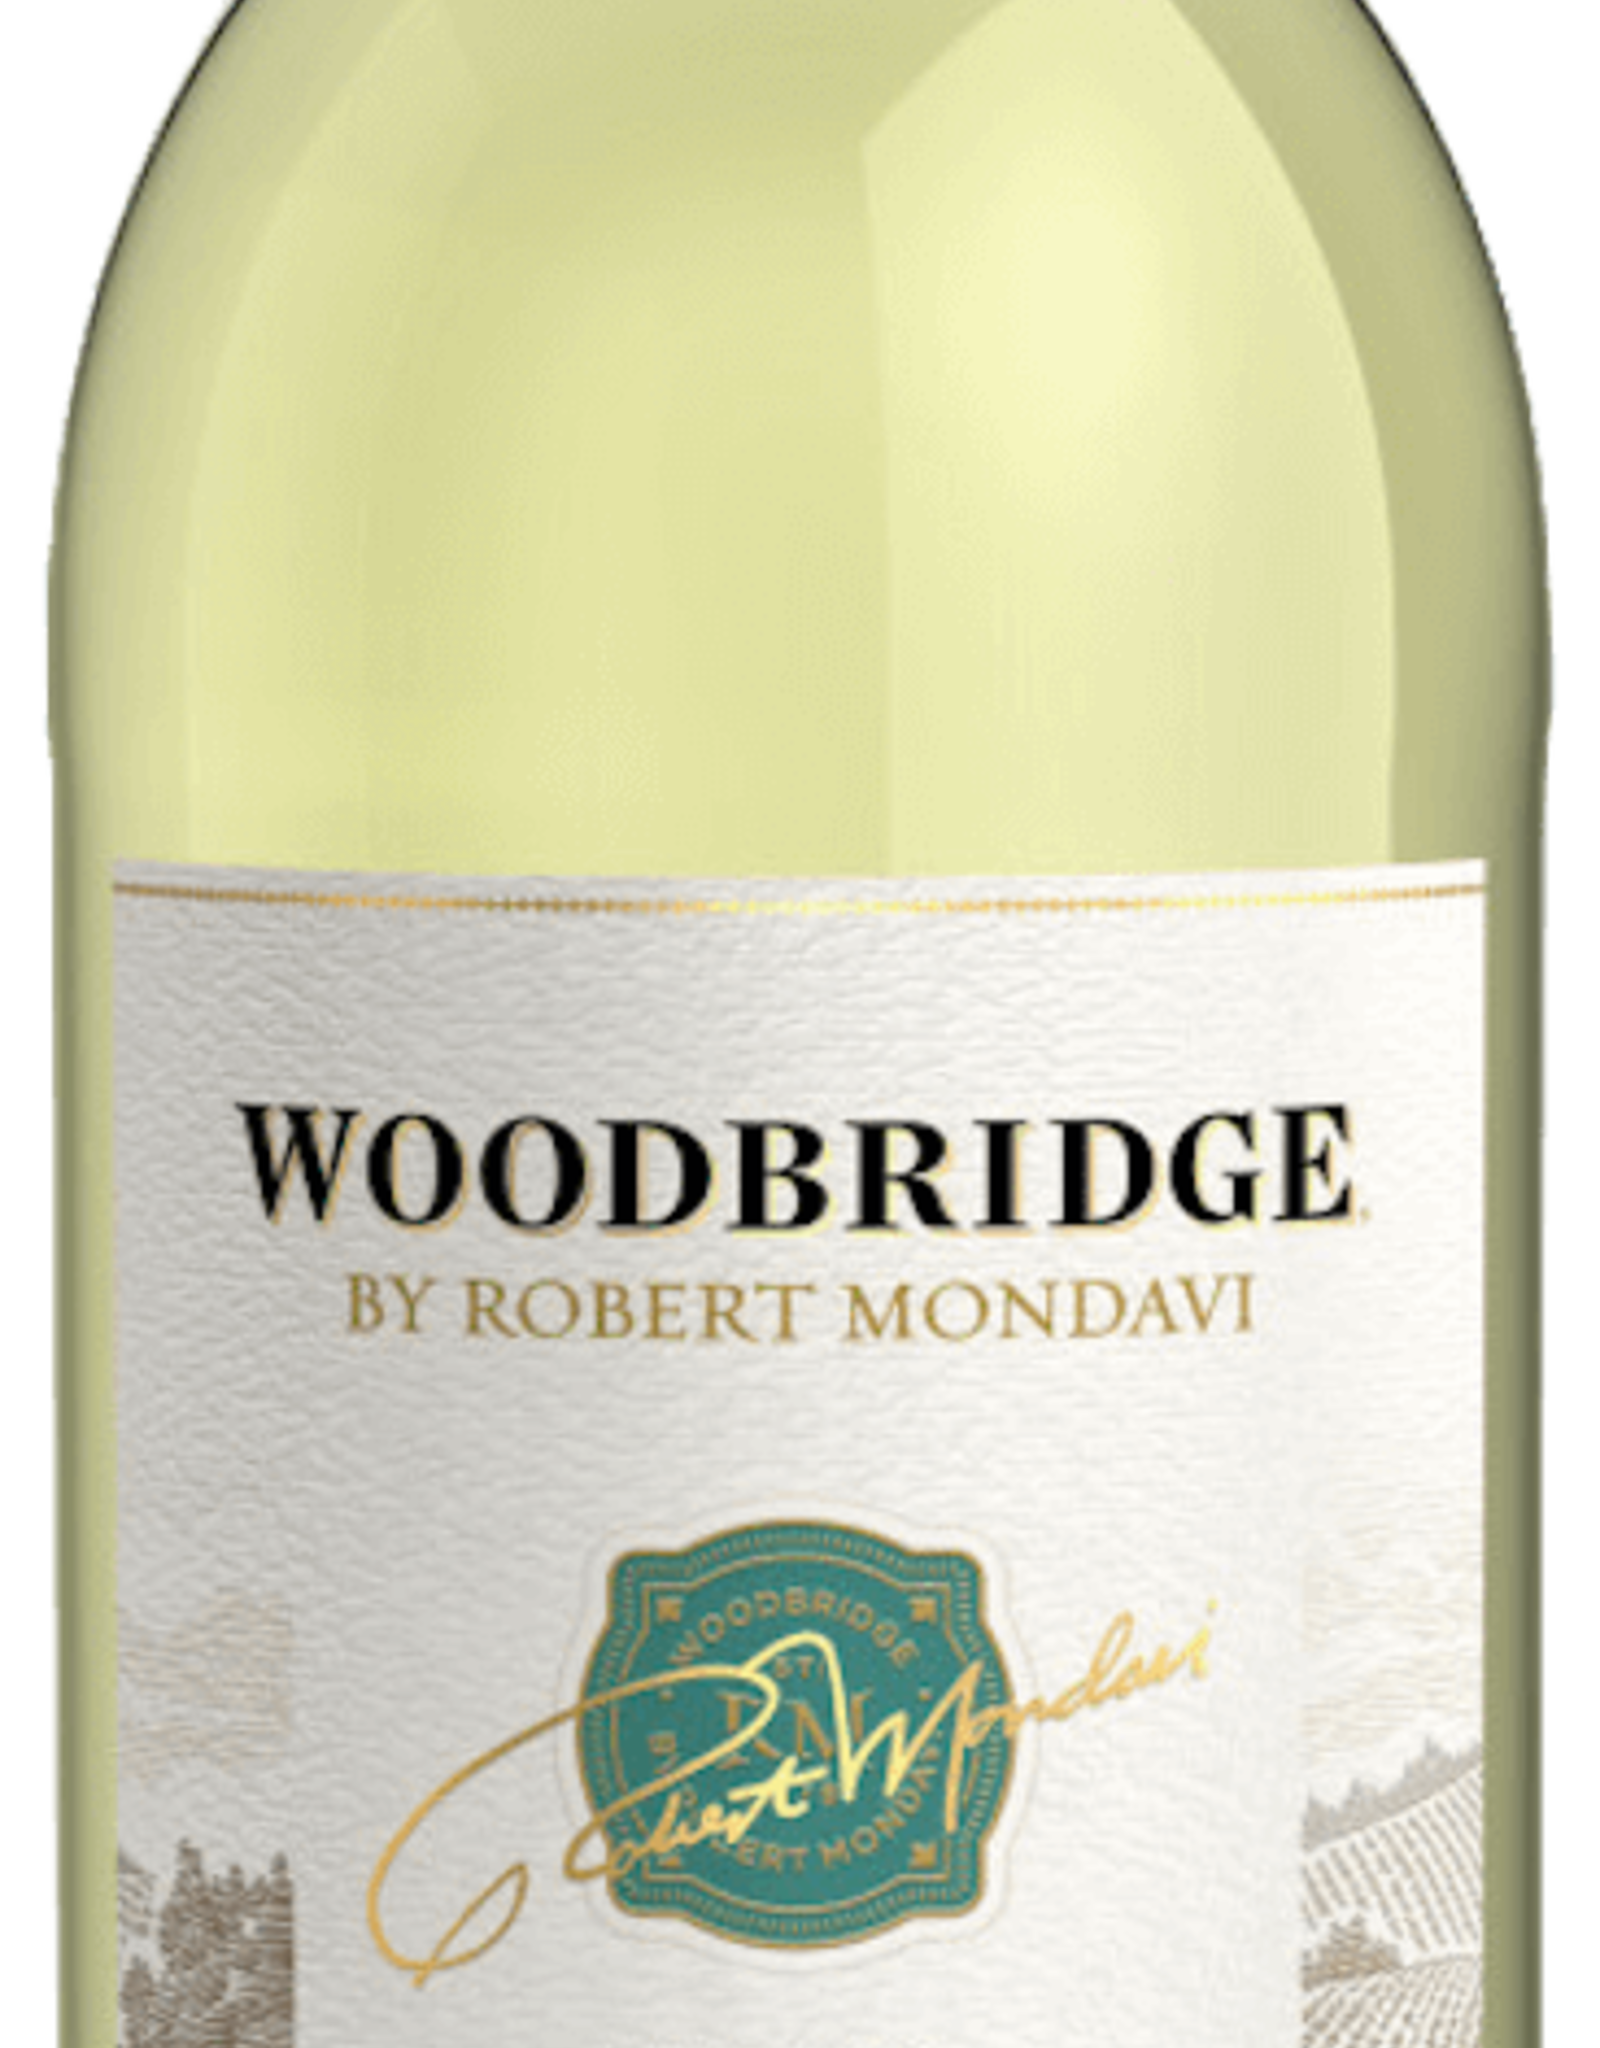 Woodbridge Pinot Grigio 1.5L